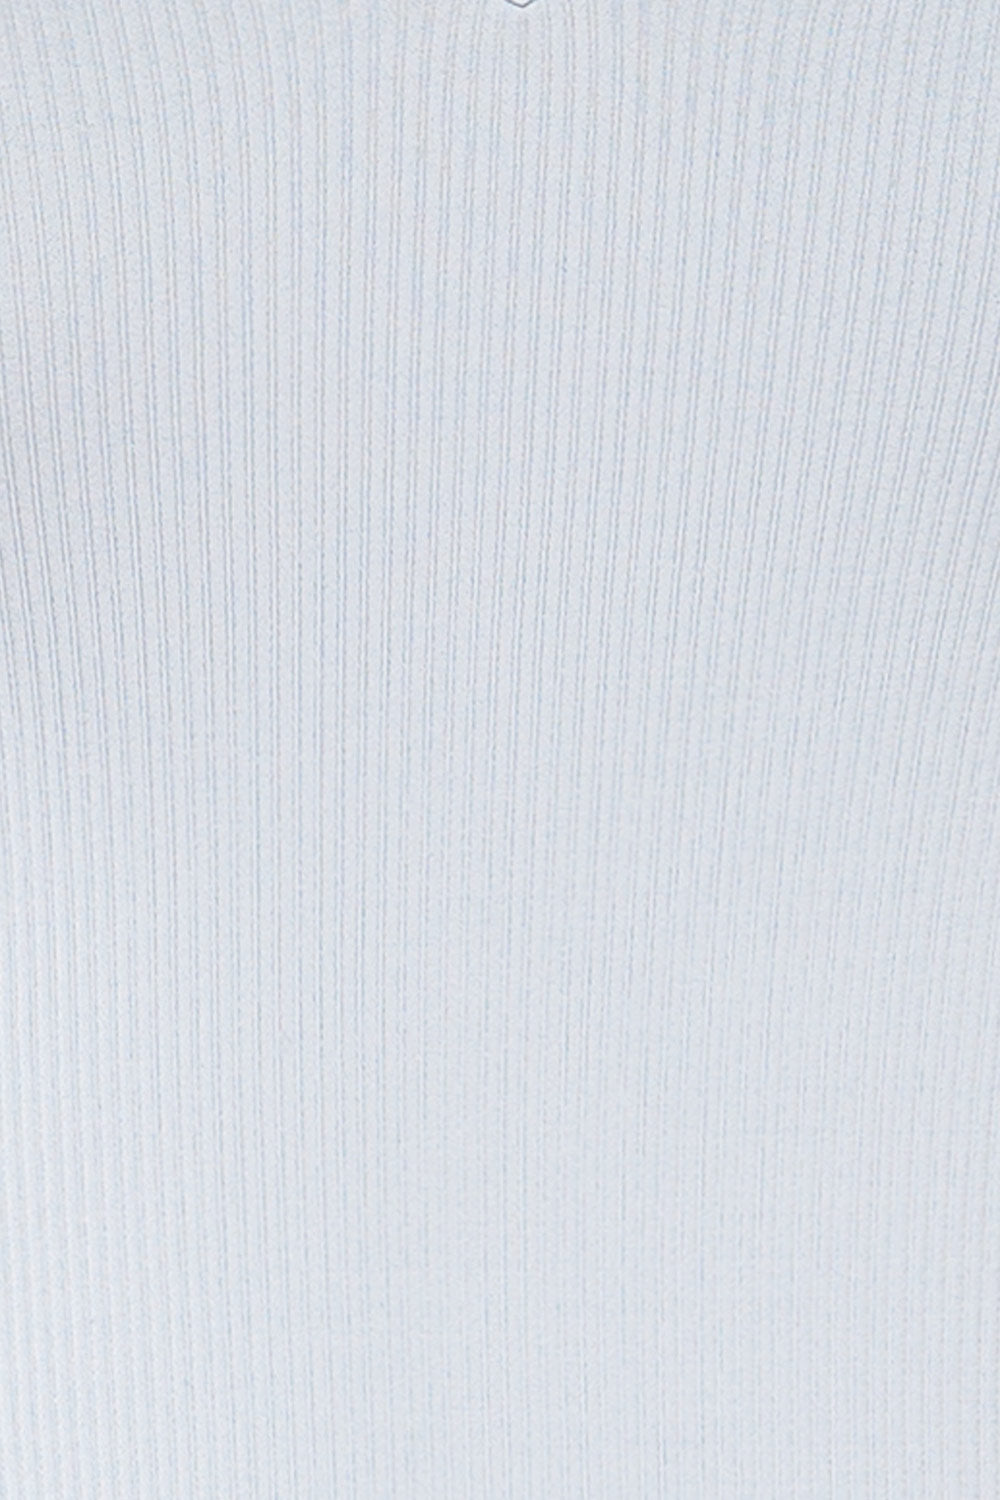 Volos Blue Ribbed Thin Strap Crop Top | La petite garçonne  fabric 